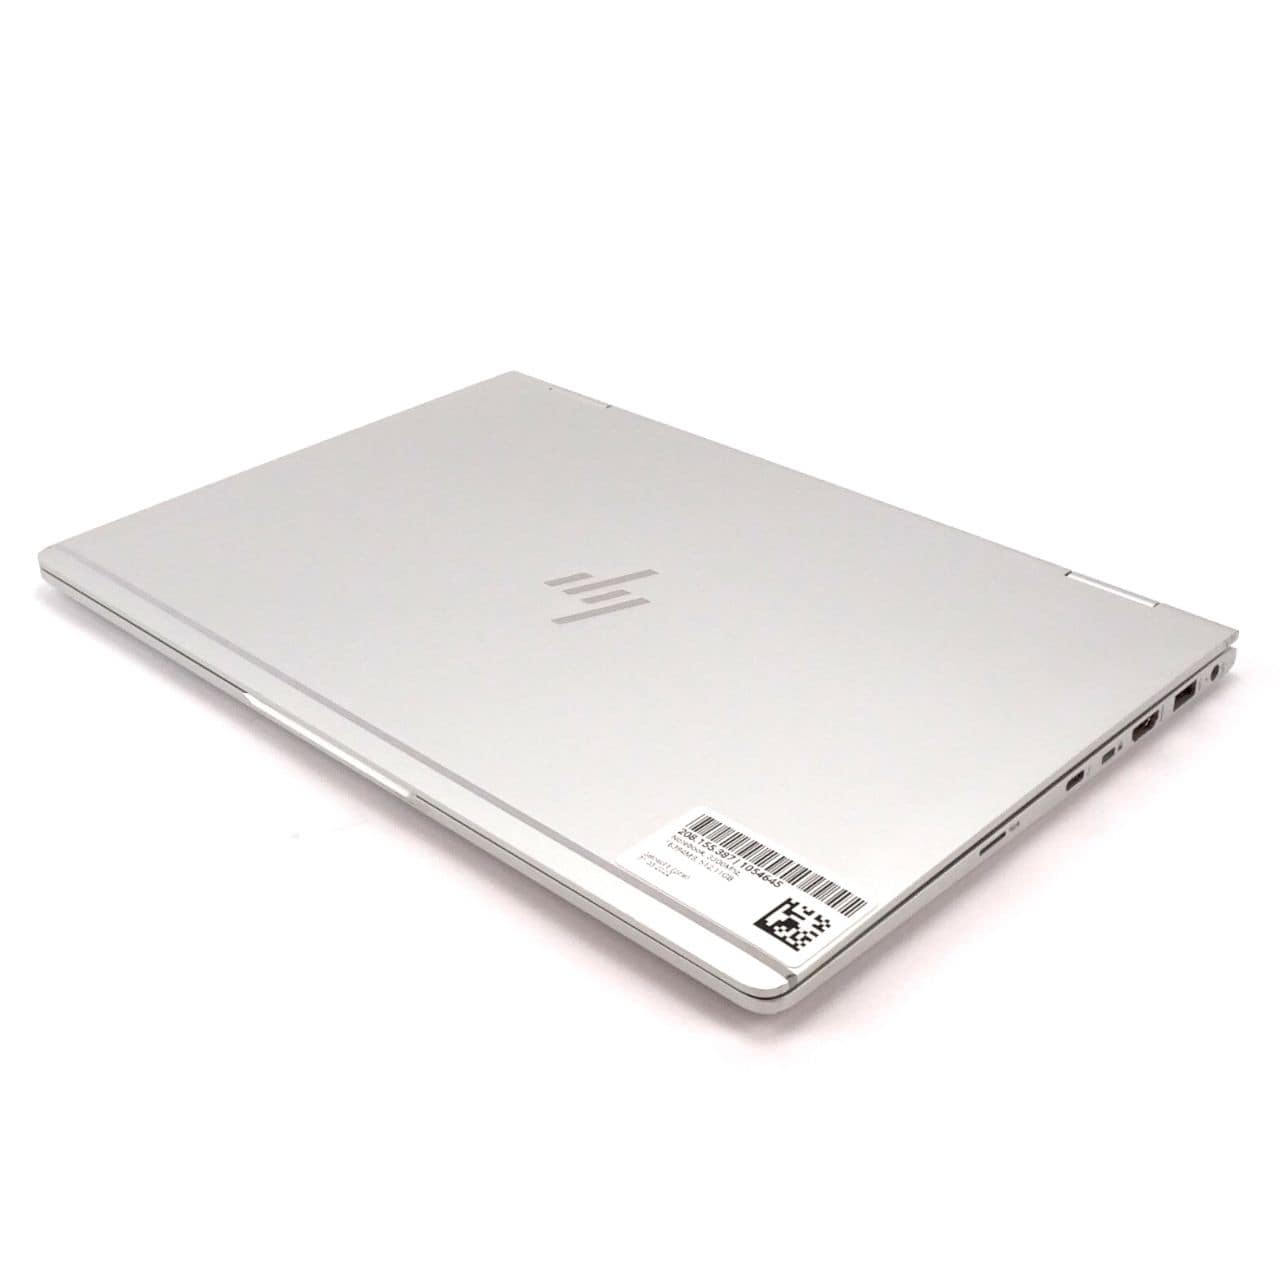 HP EliteBook x360 1030 G2 

 - 13,3 Zoll - Intel Core i5 7200U @ 2,5 GHz - 8 GB - 256 GB SSD - 1920 x 1080 FHD - Touchscreen - Windows 10 Professional - Sehr gut